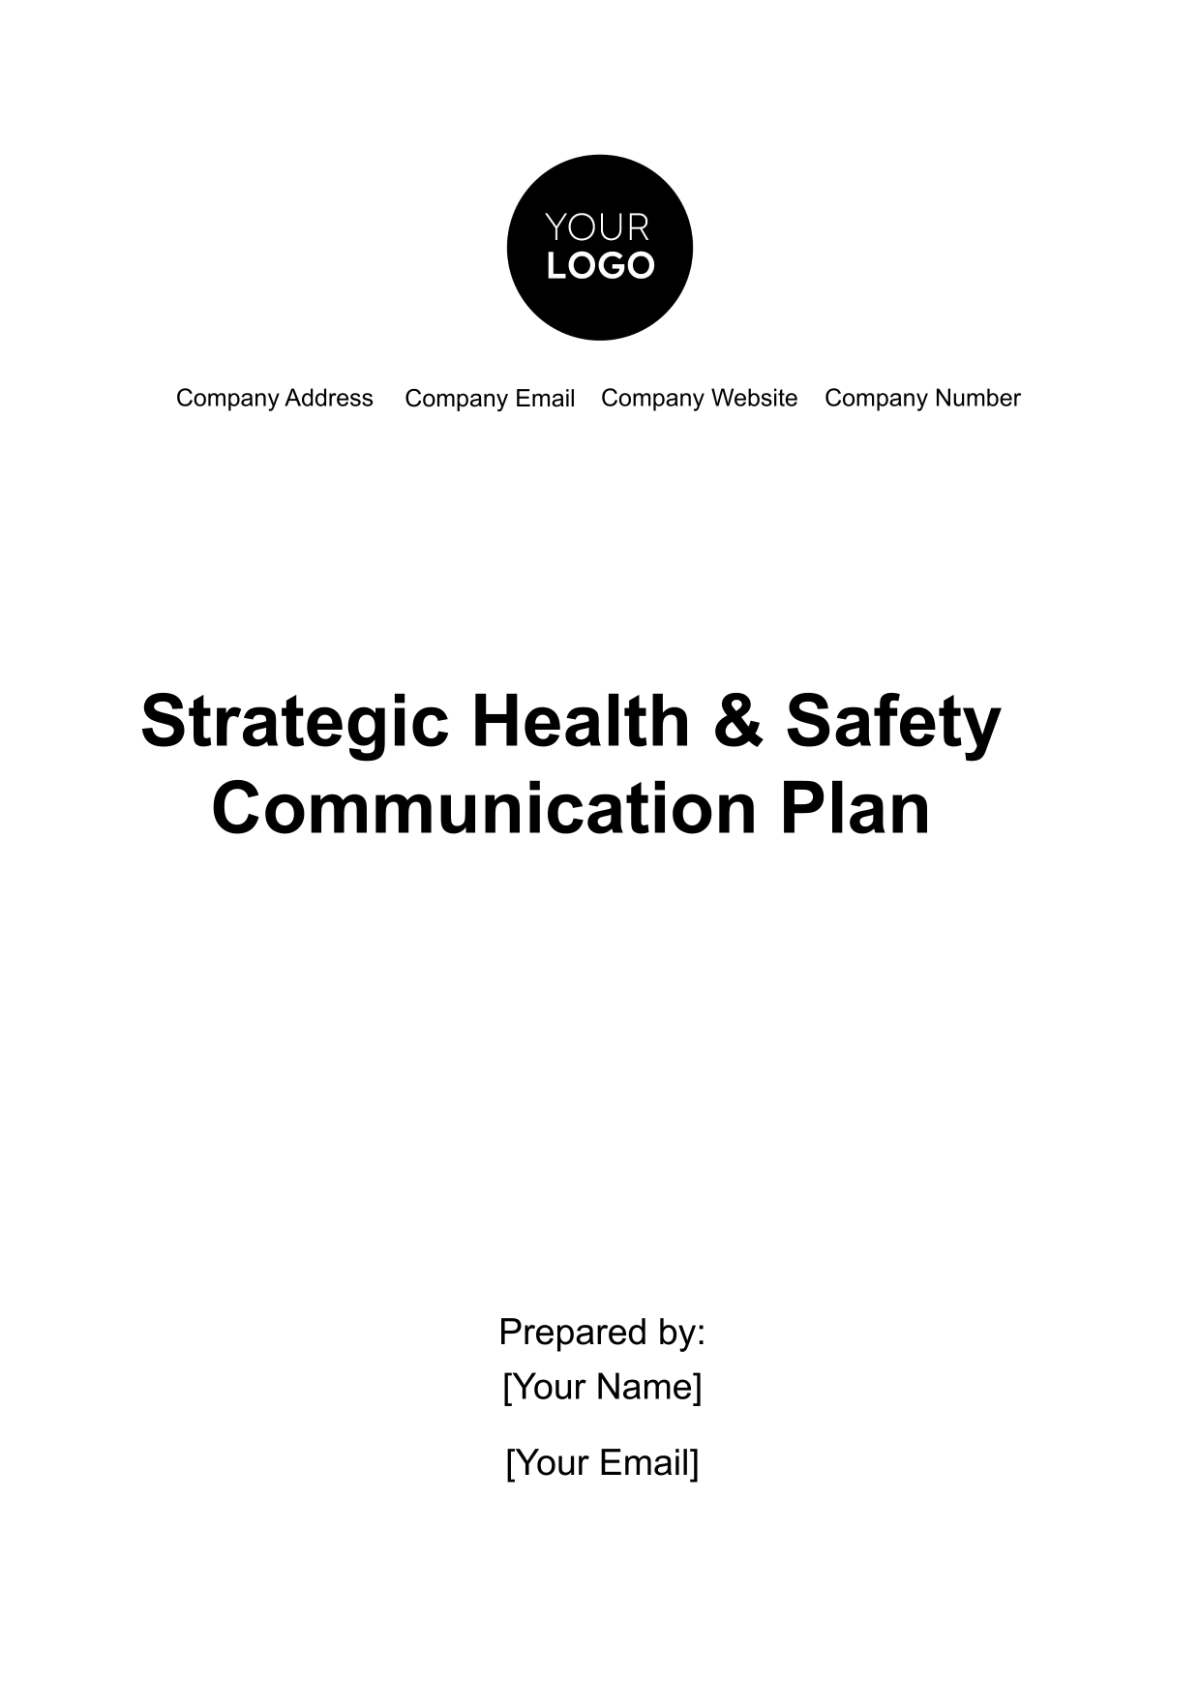 Strategic Health & Safety Communication Plan Template